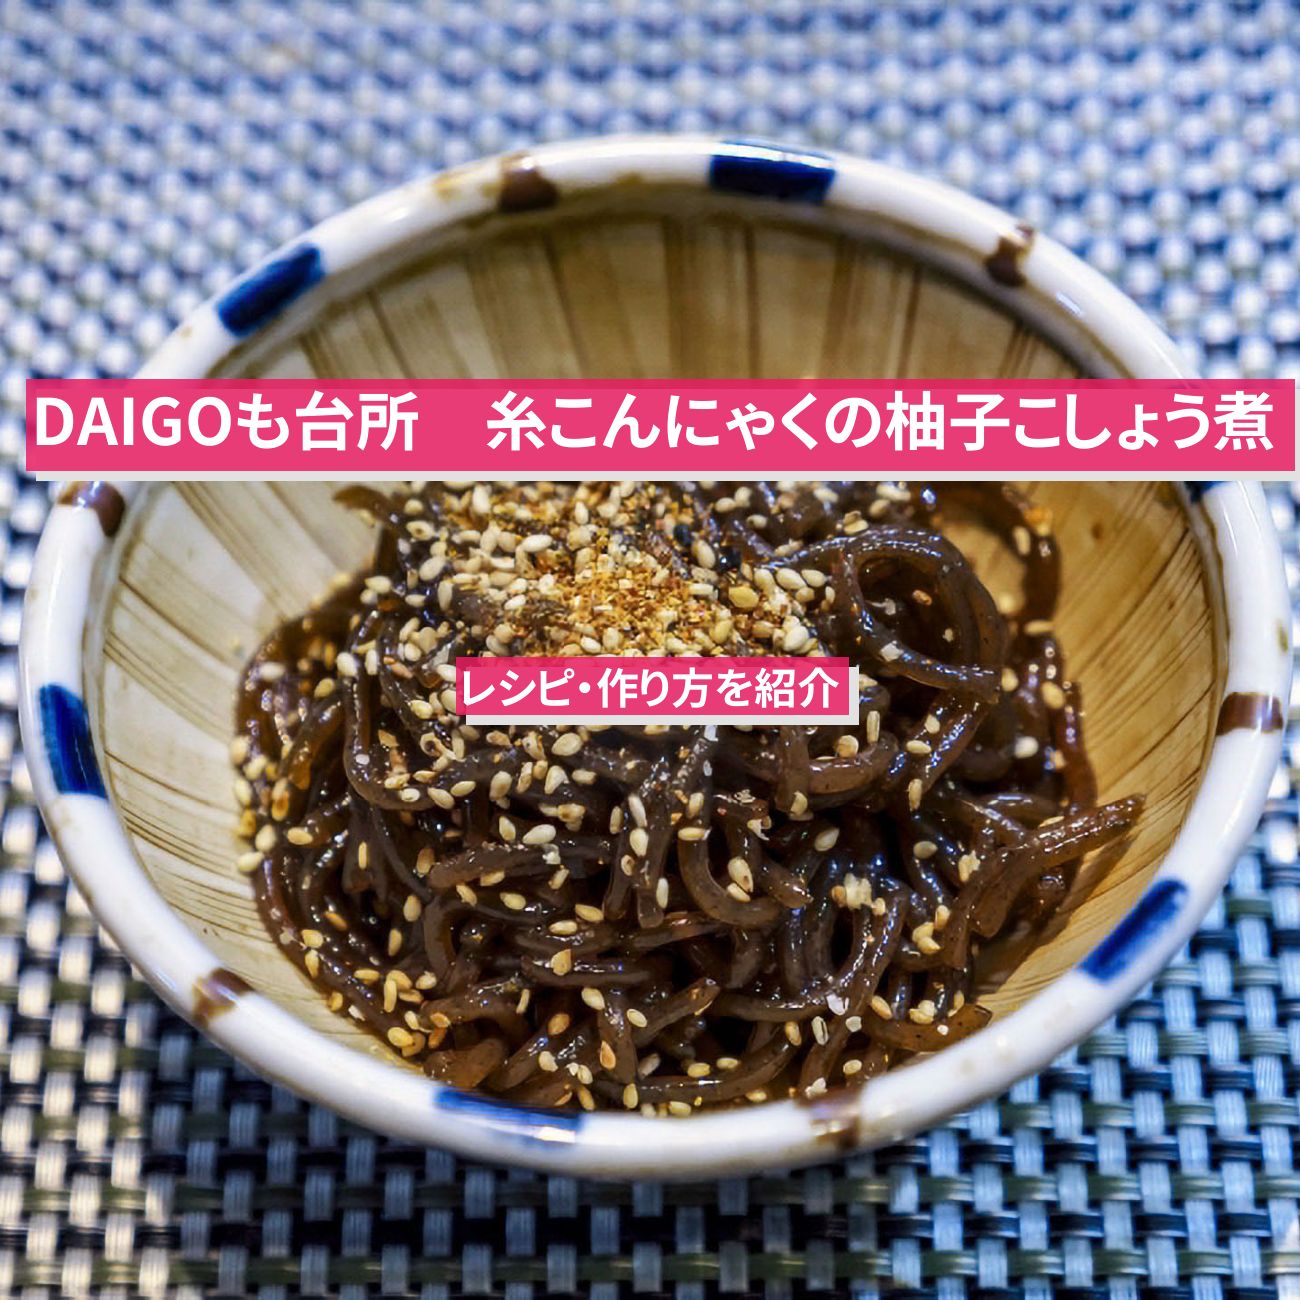 【DAIGOも台所】『糸こんにゃくの柚子こしょう煮』のレシピ・作り方を紹介